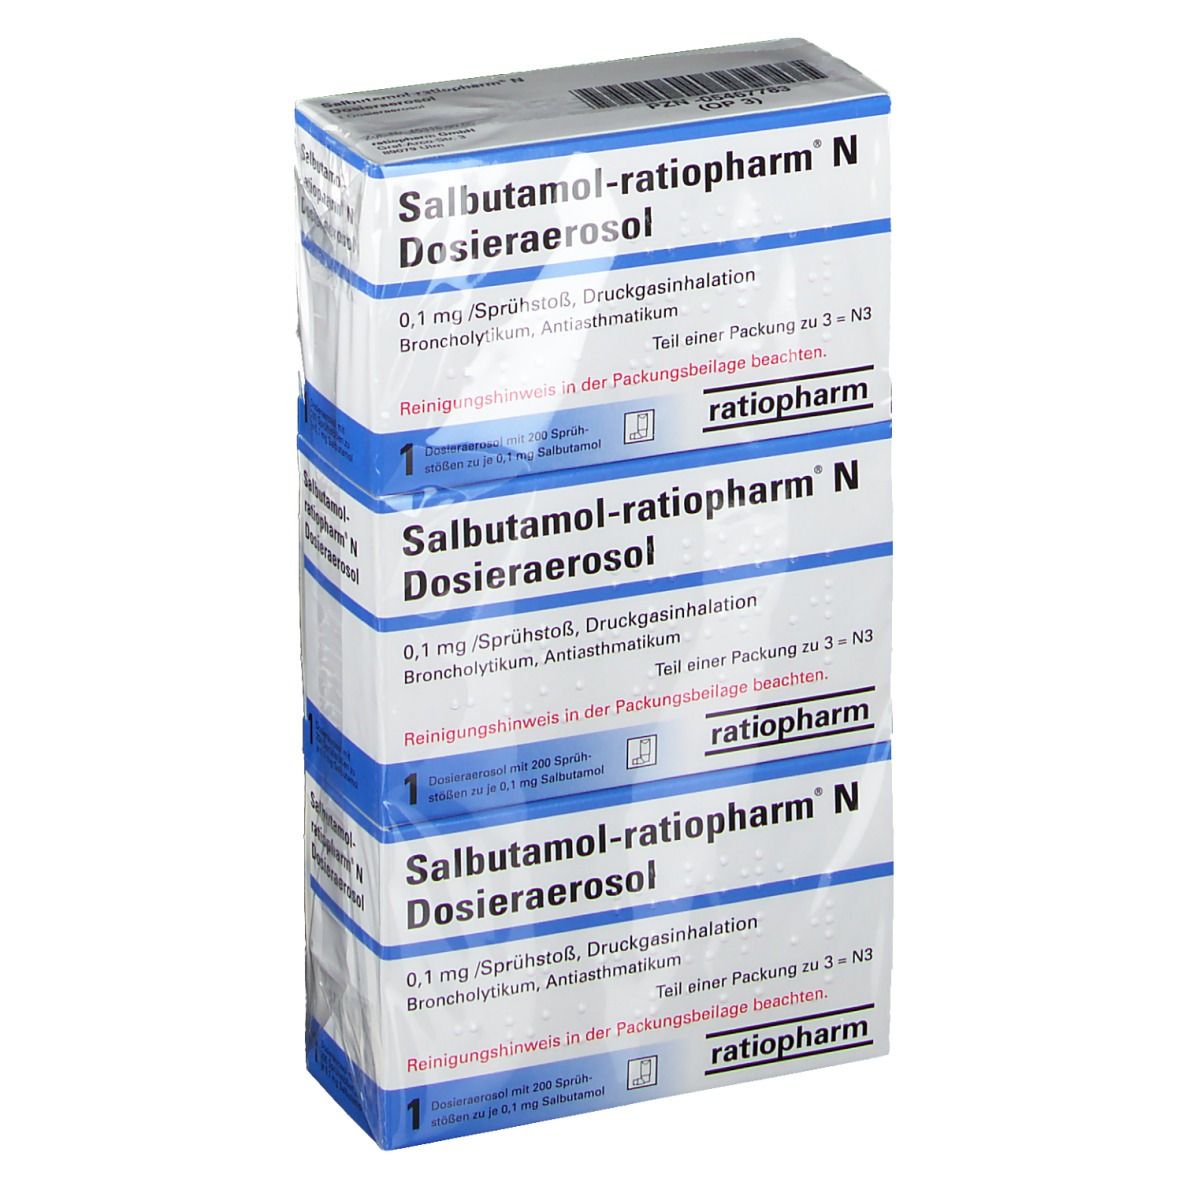 Salbutamol-ratiopharm® N